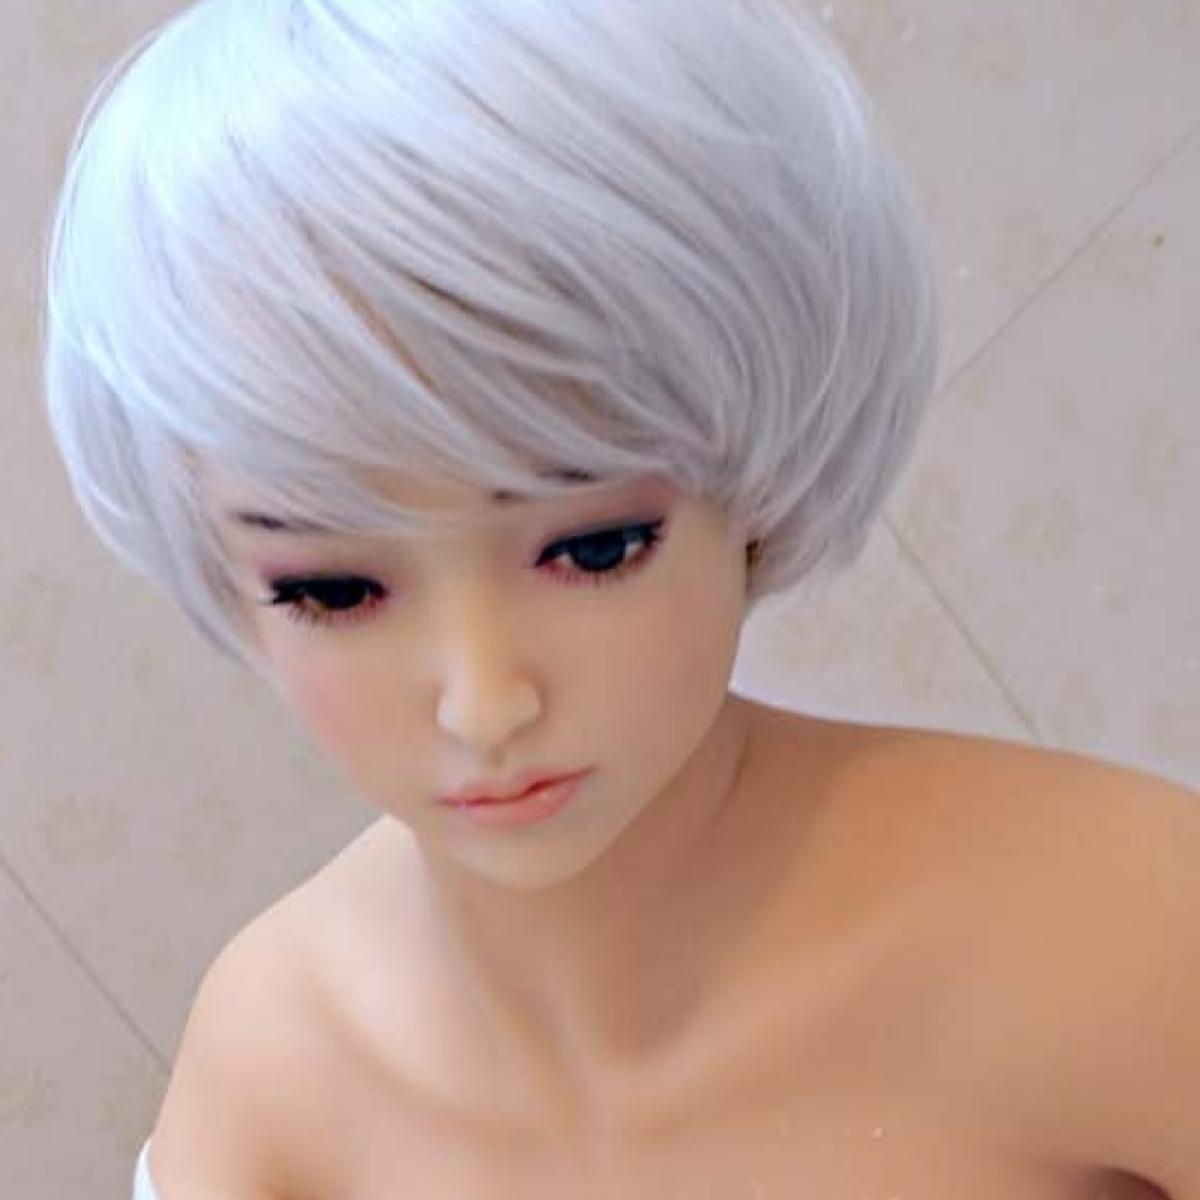 Neodoll Sugarbabe Head - Sex Doll Head - M16 Compatible - Black